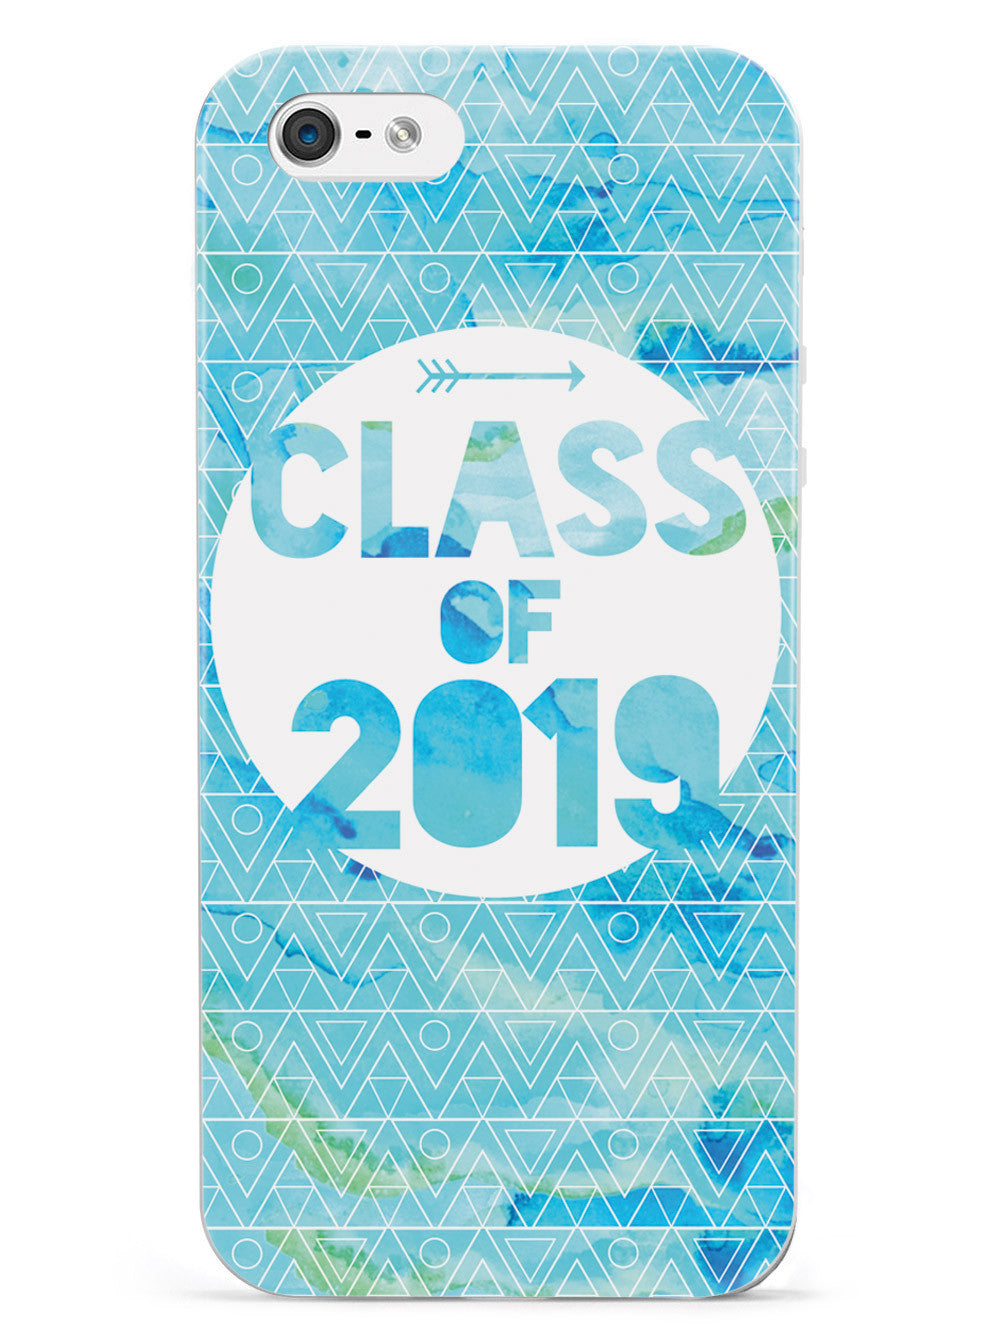 Class of 2019 - Blue Watercolor Case